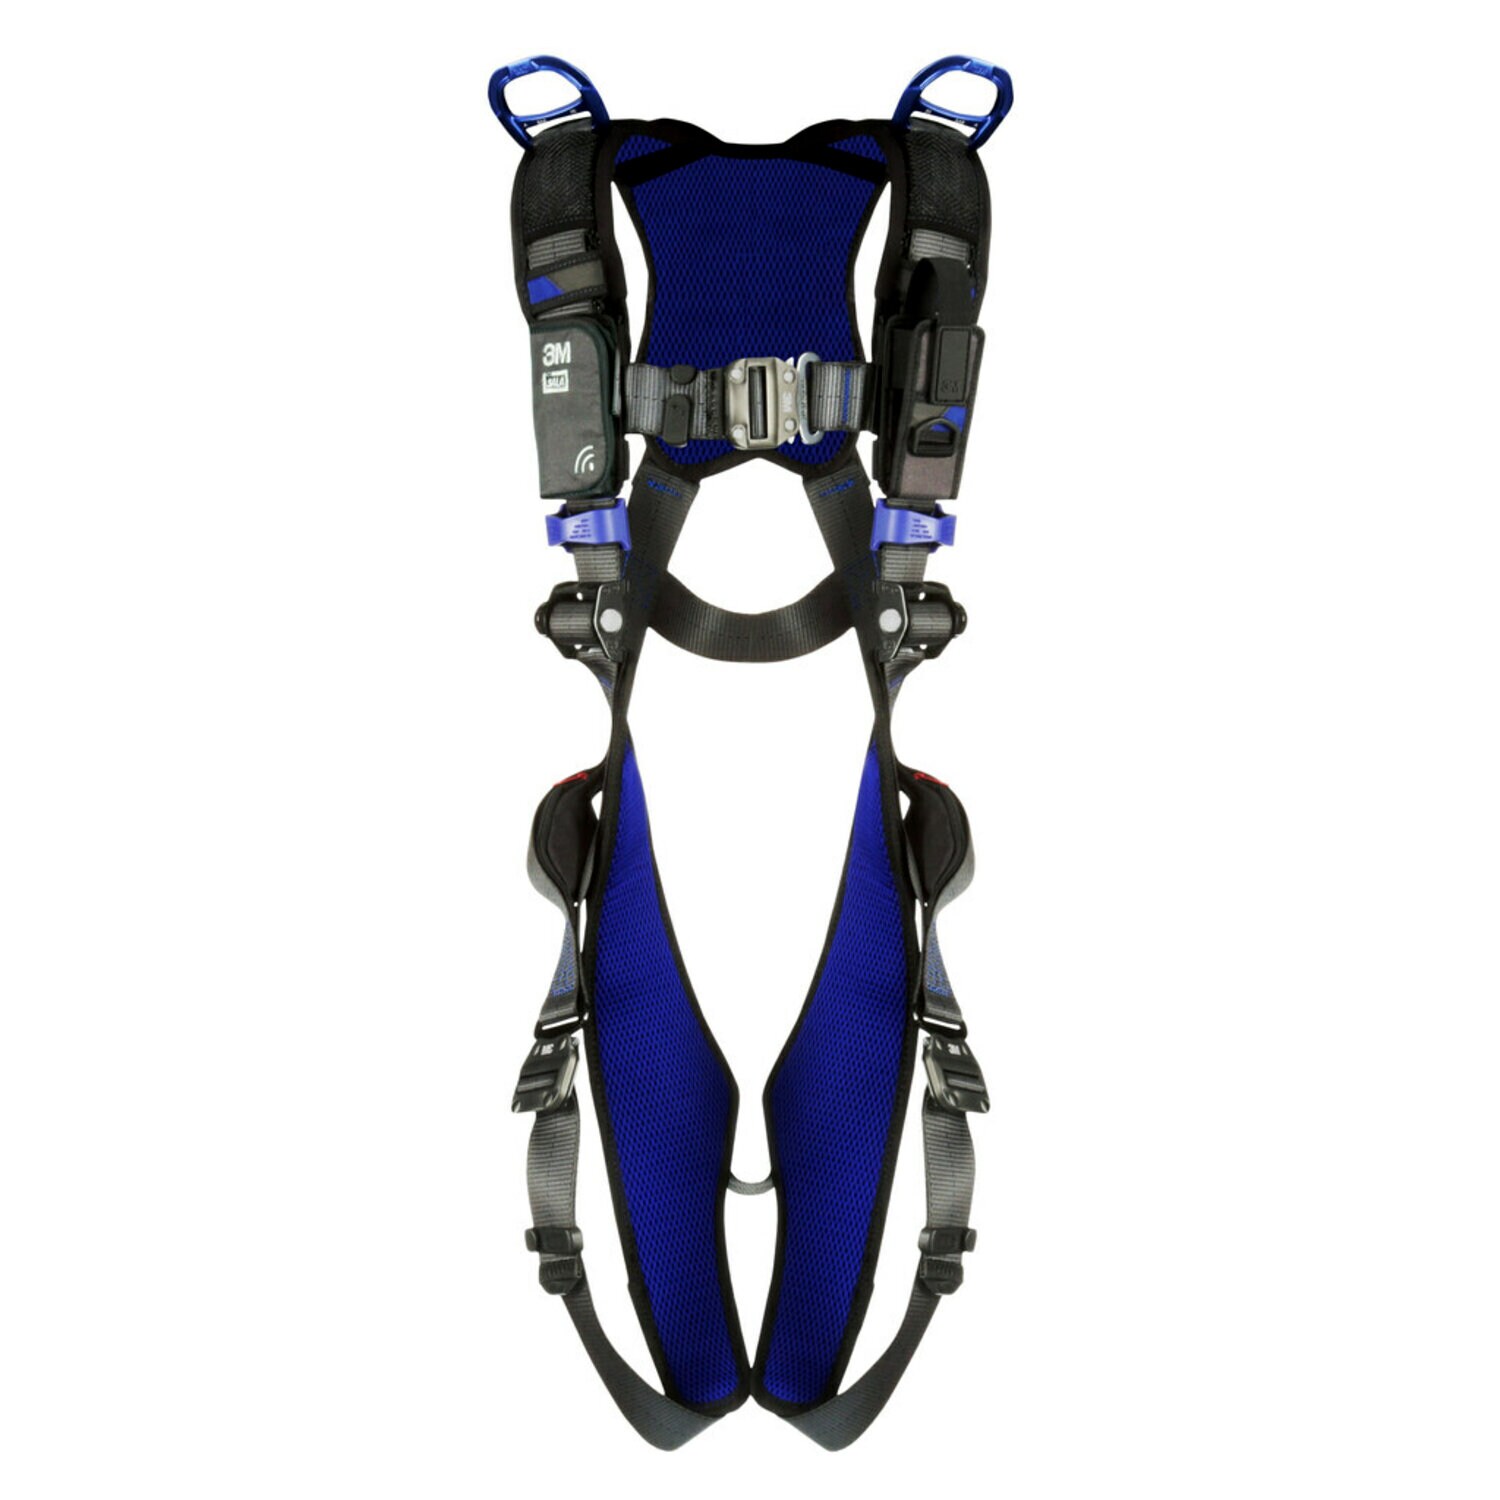 7100188757 - 3M DBI-SALA ExoFit X300 Comfort Vest Rescue Safety Harness 1113064,
Medium